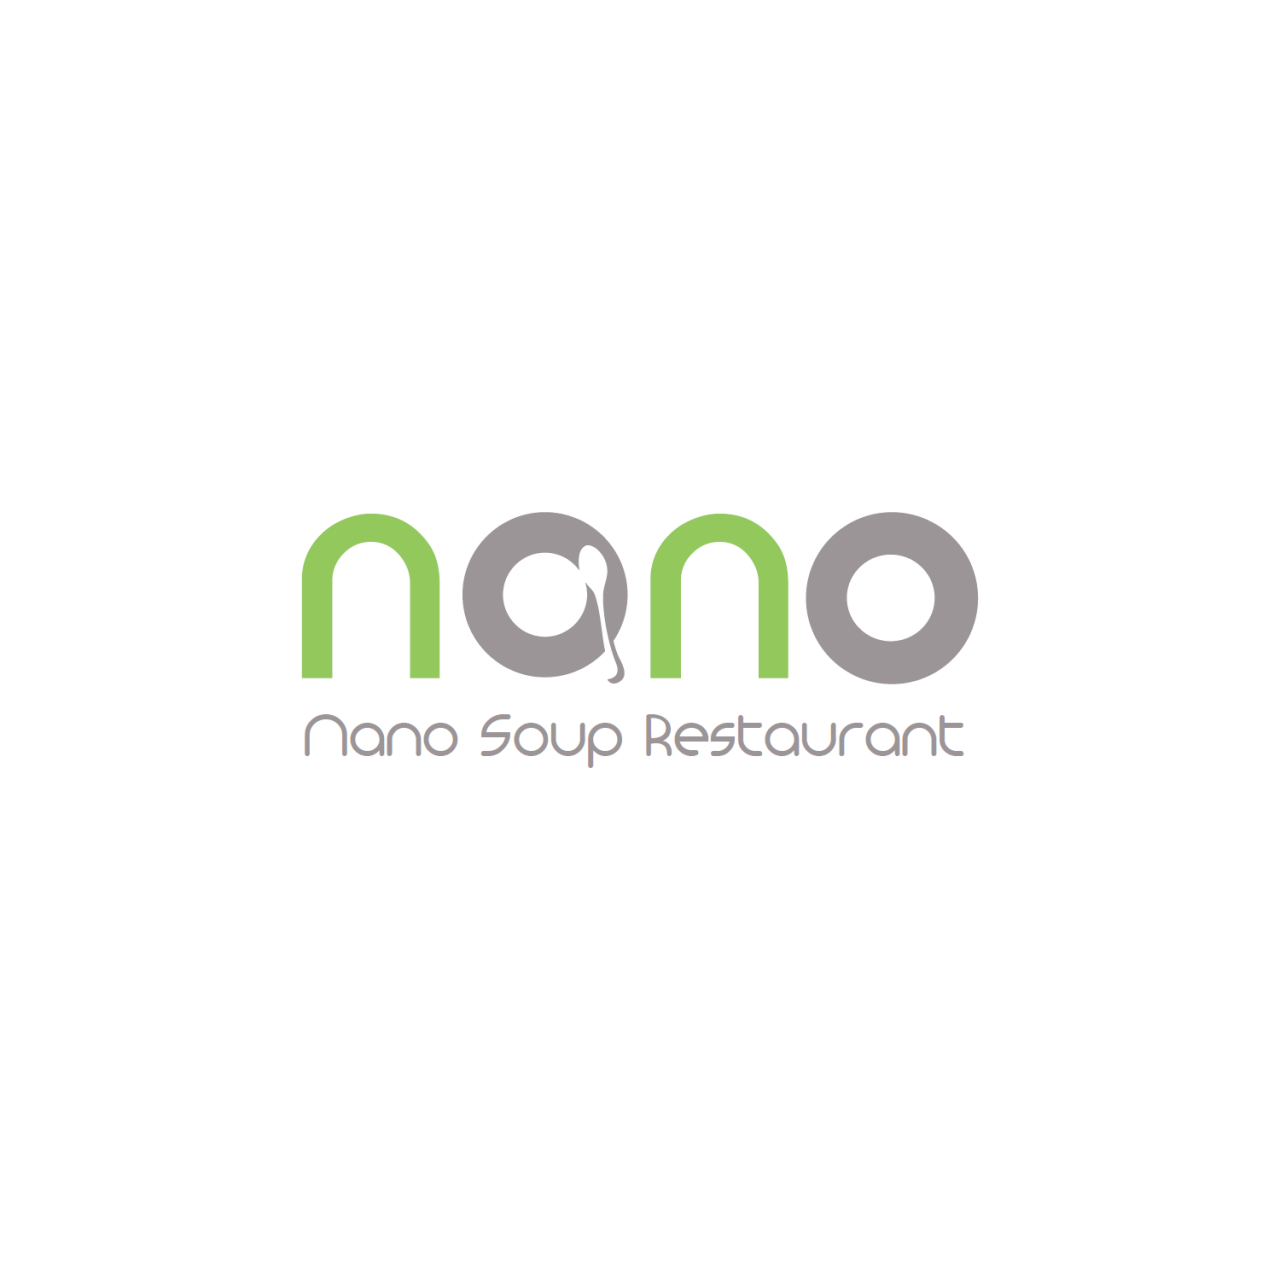 مطعم نونو للحساء